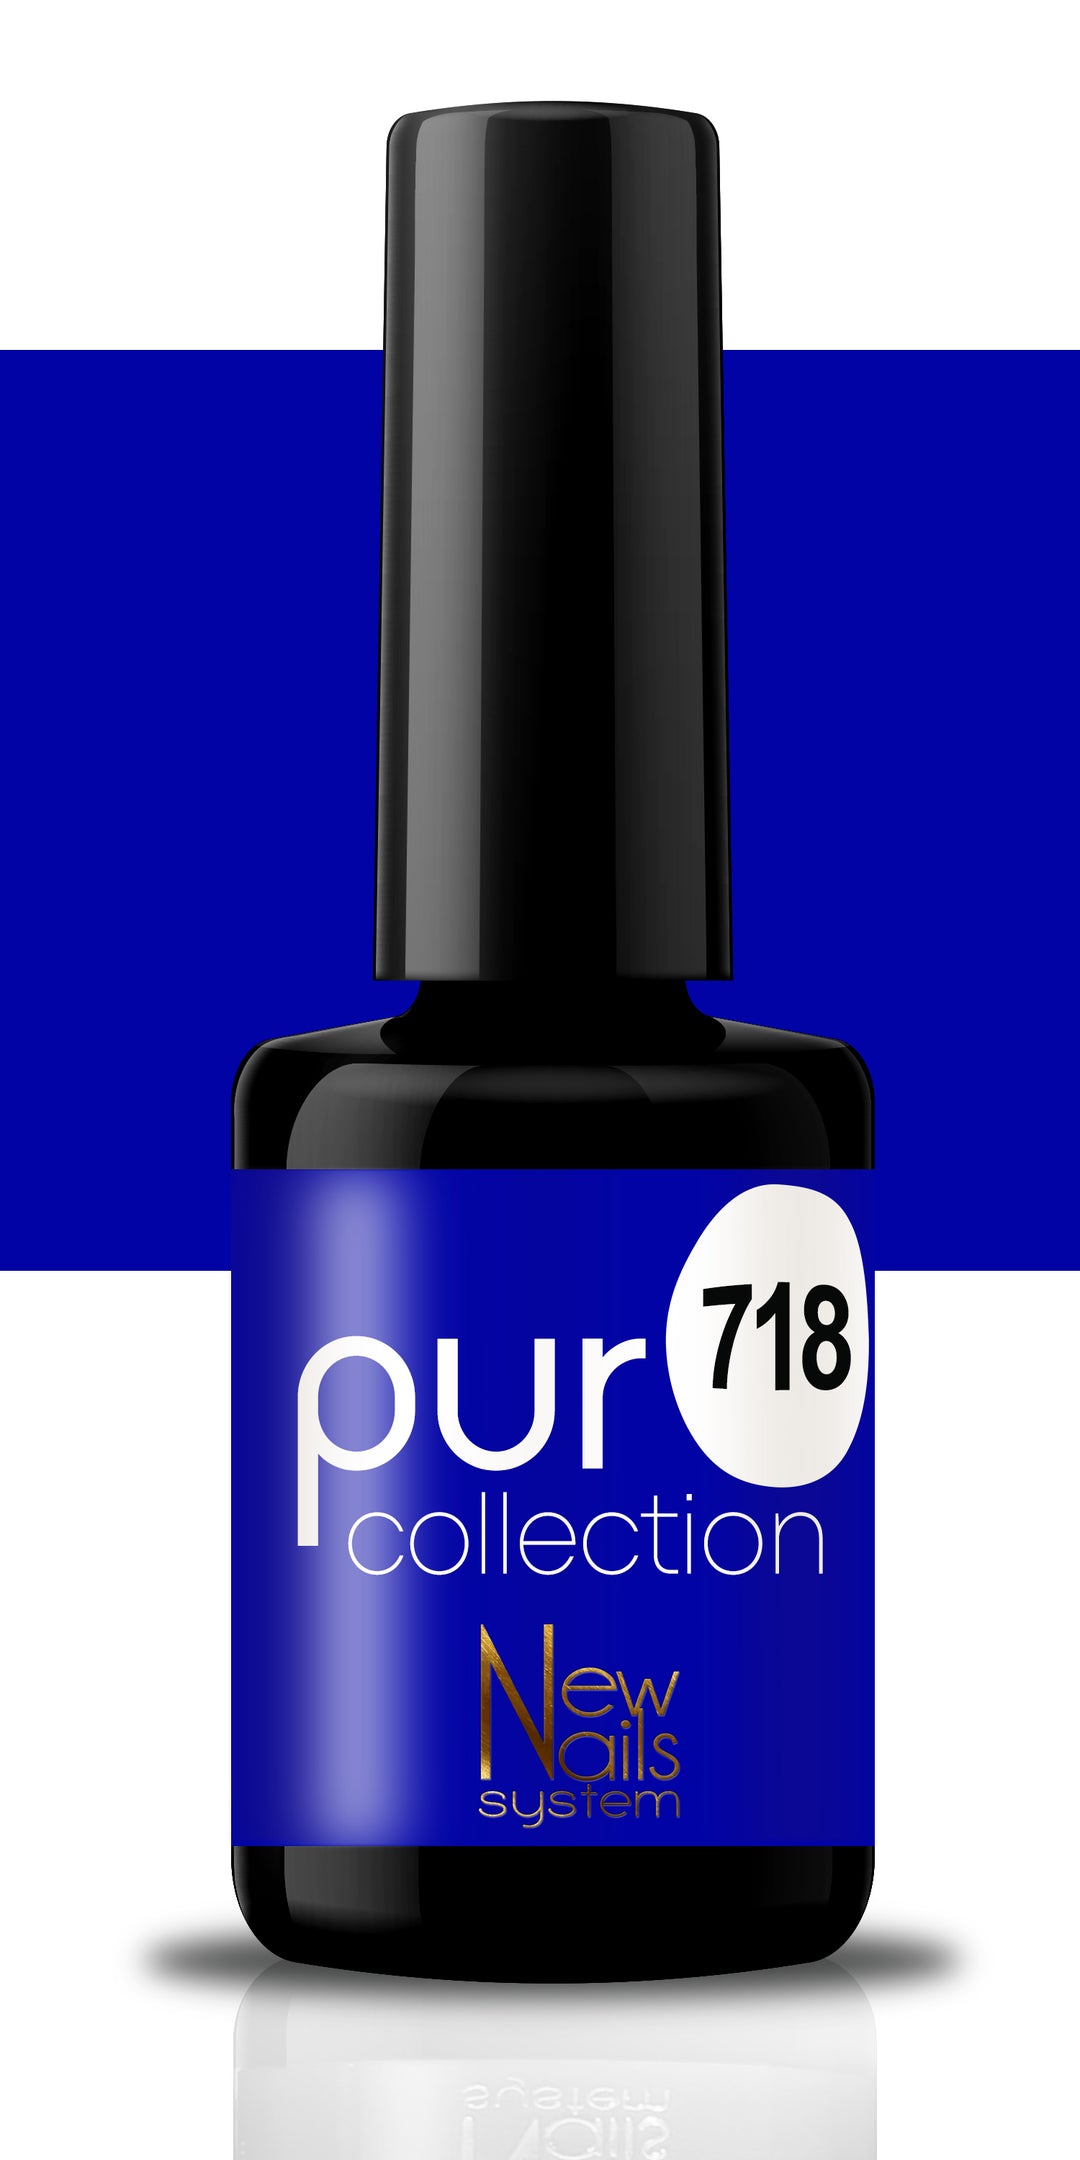 Puro collection Blues 718 polish gel 5ml